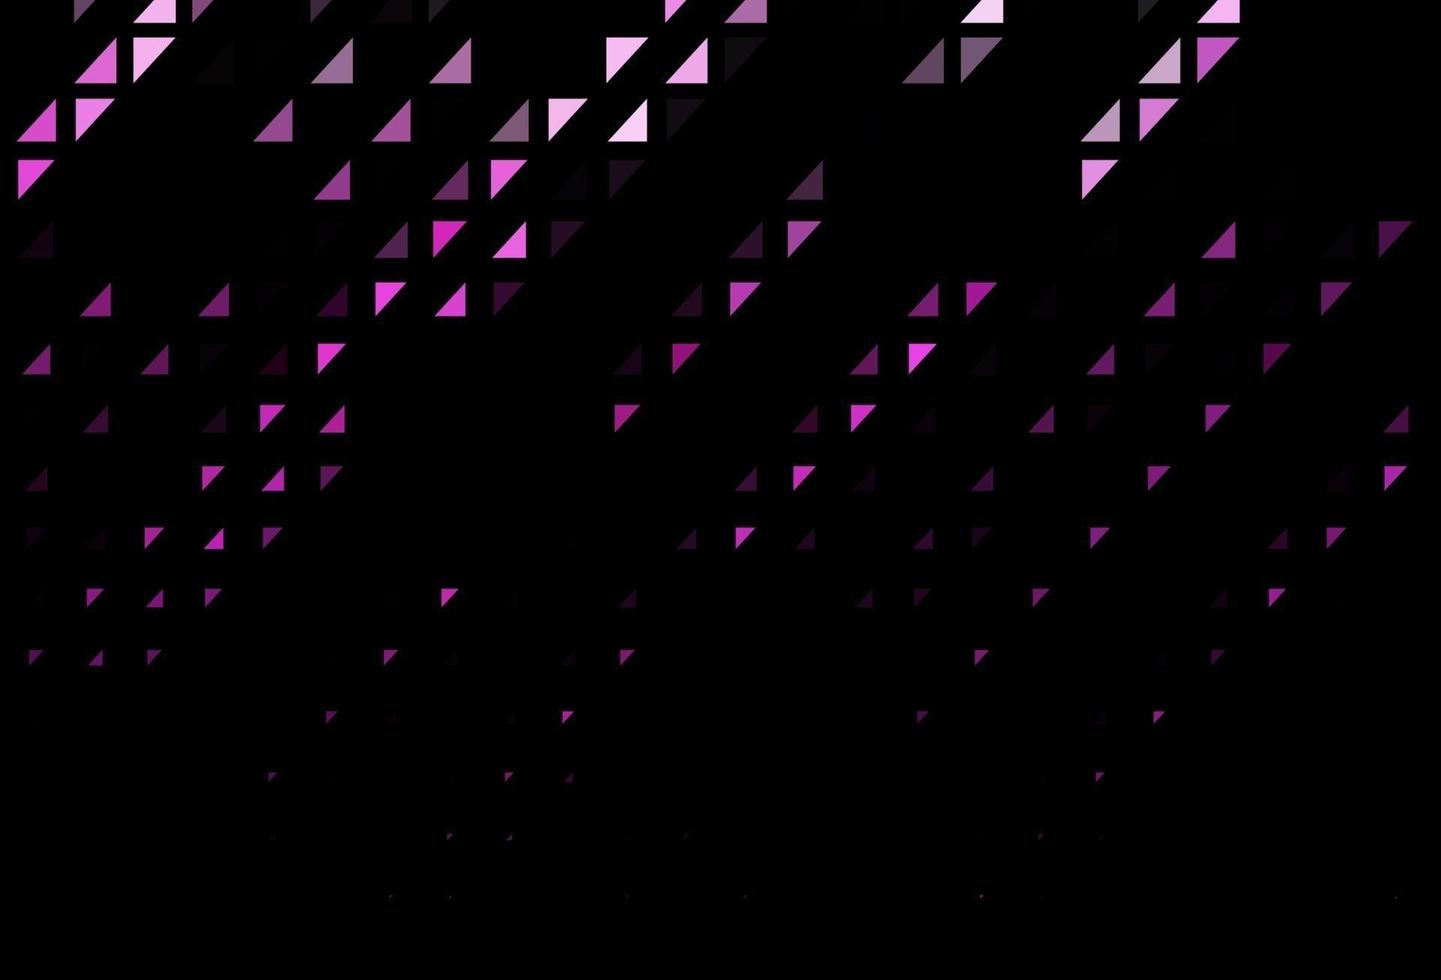 pano de fundo vector rosa escuro com pontos.